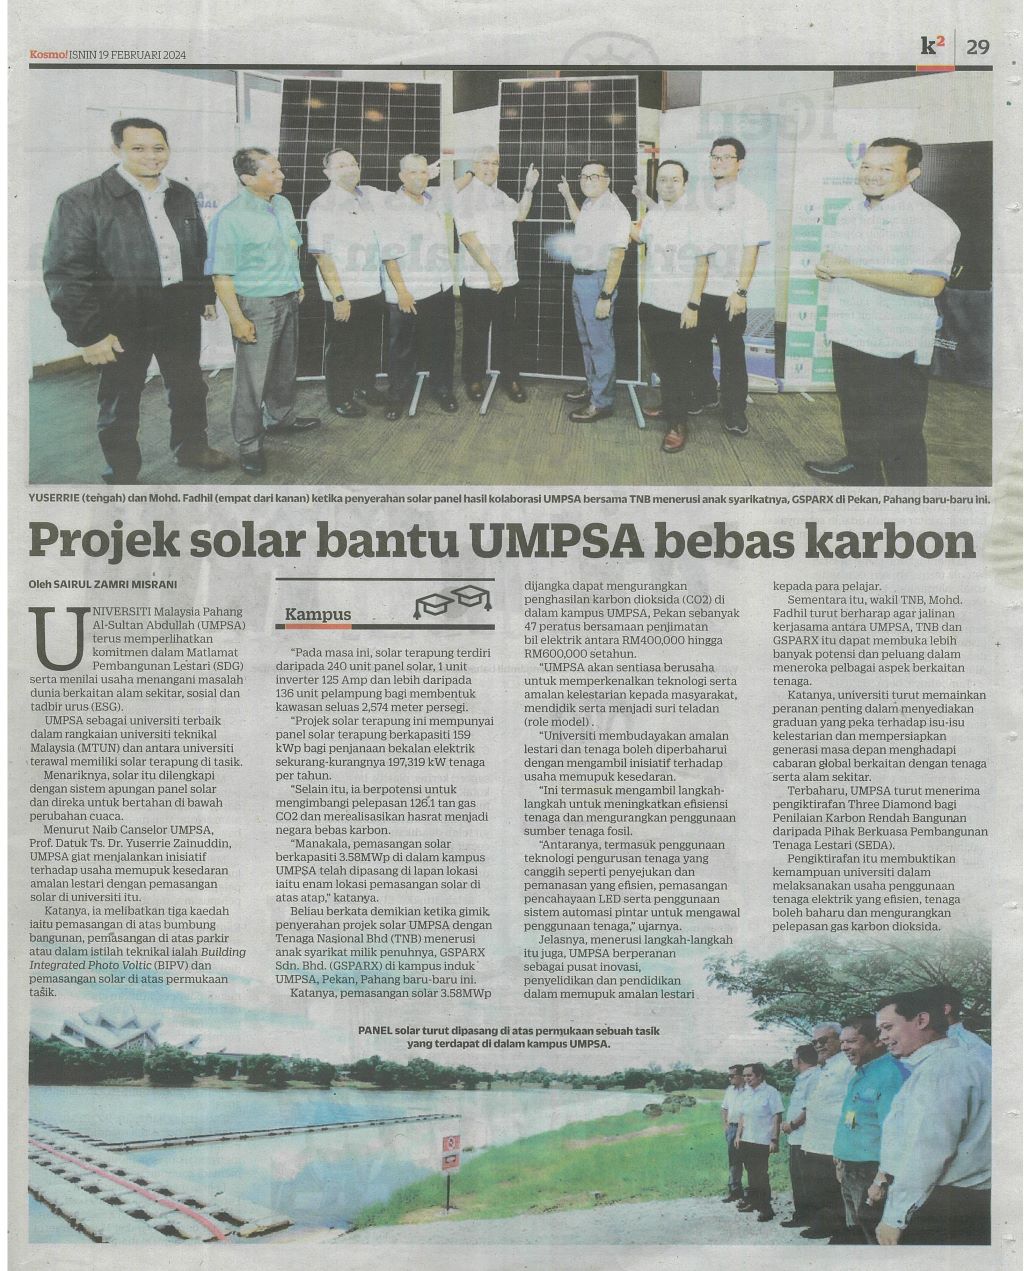 Projek solar bantu UMPSA bebas karbon 